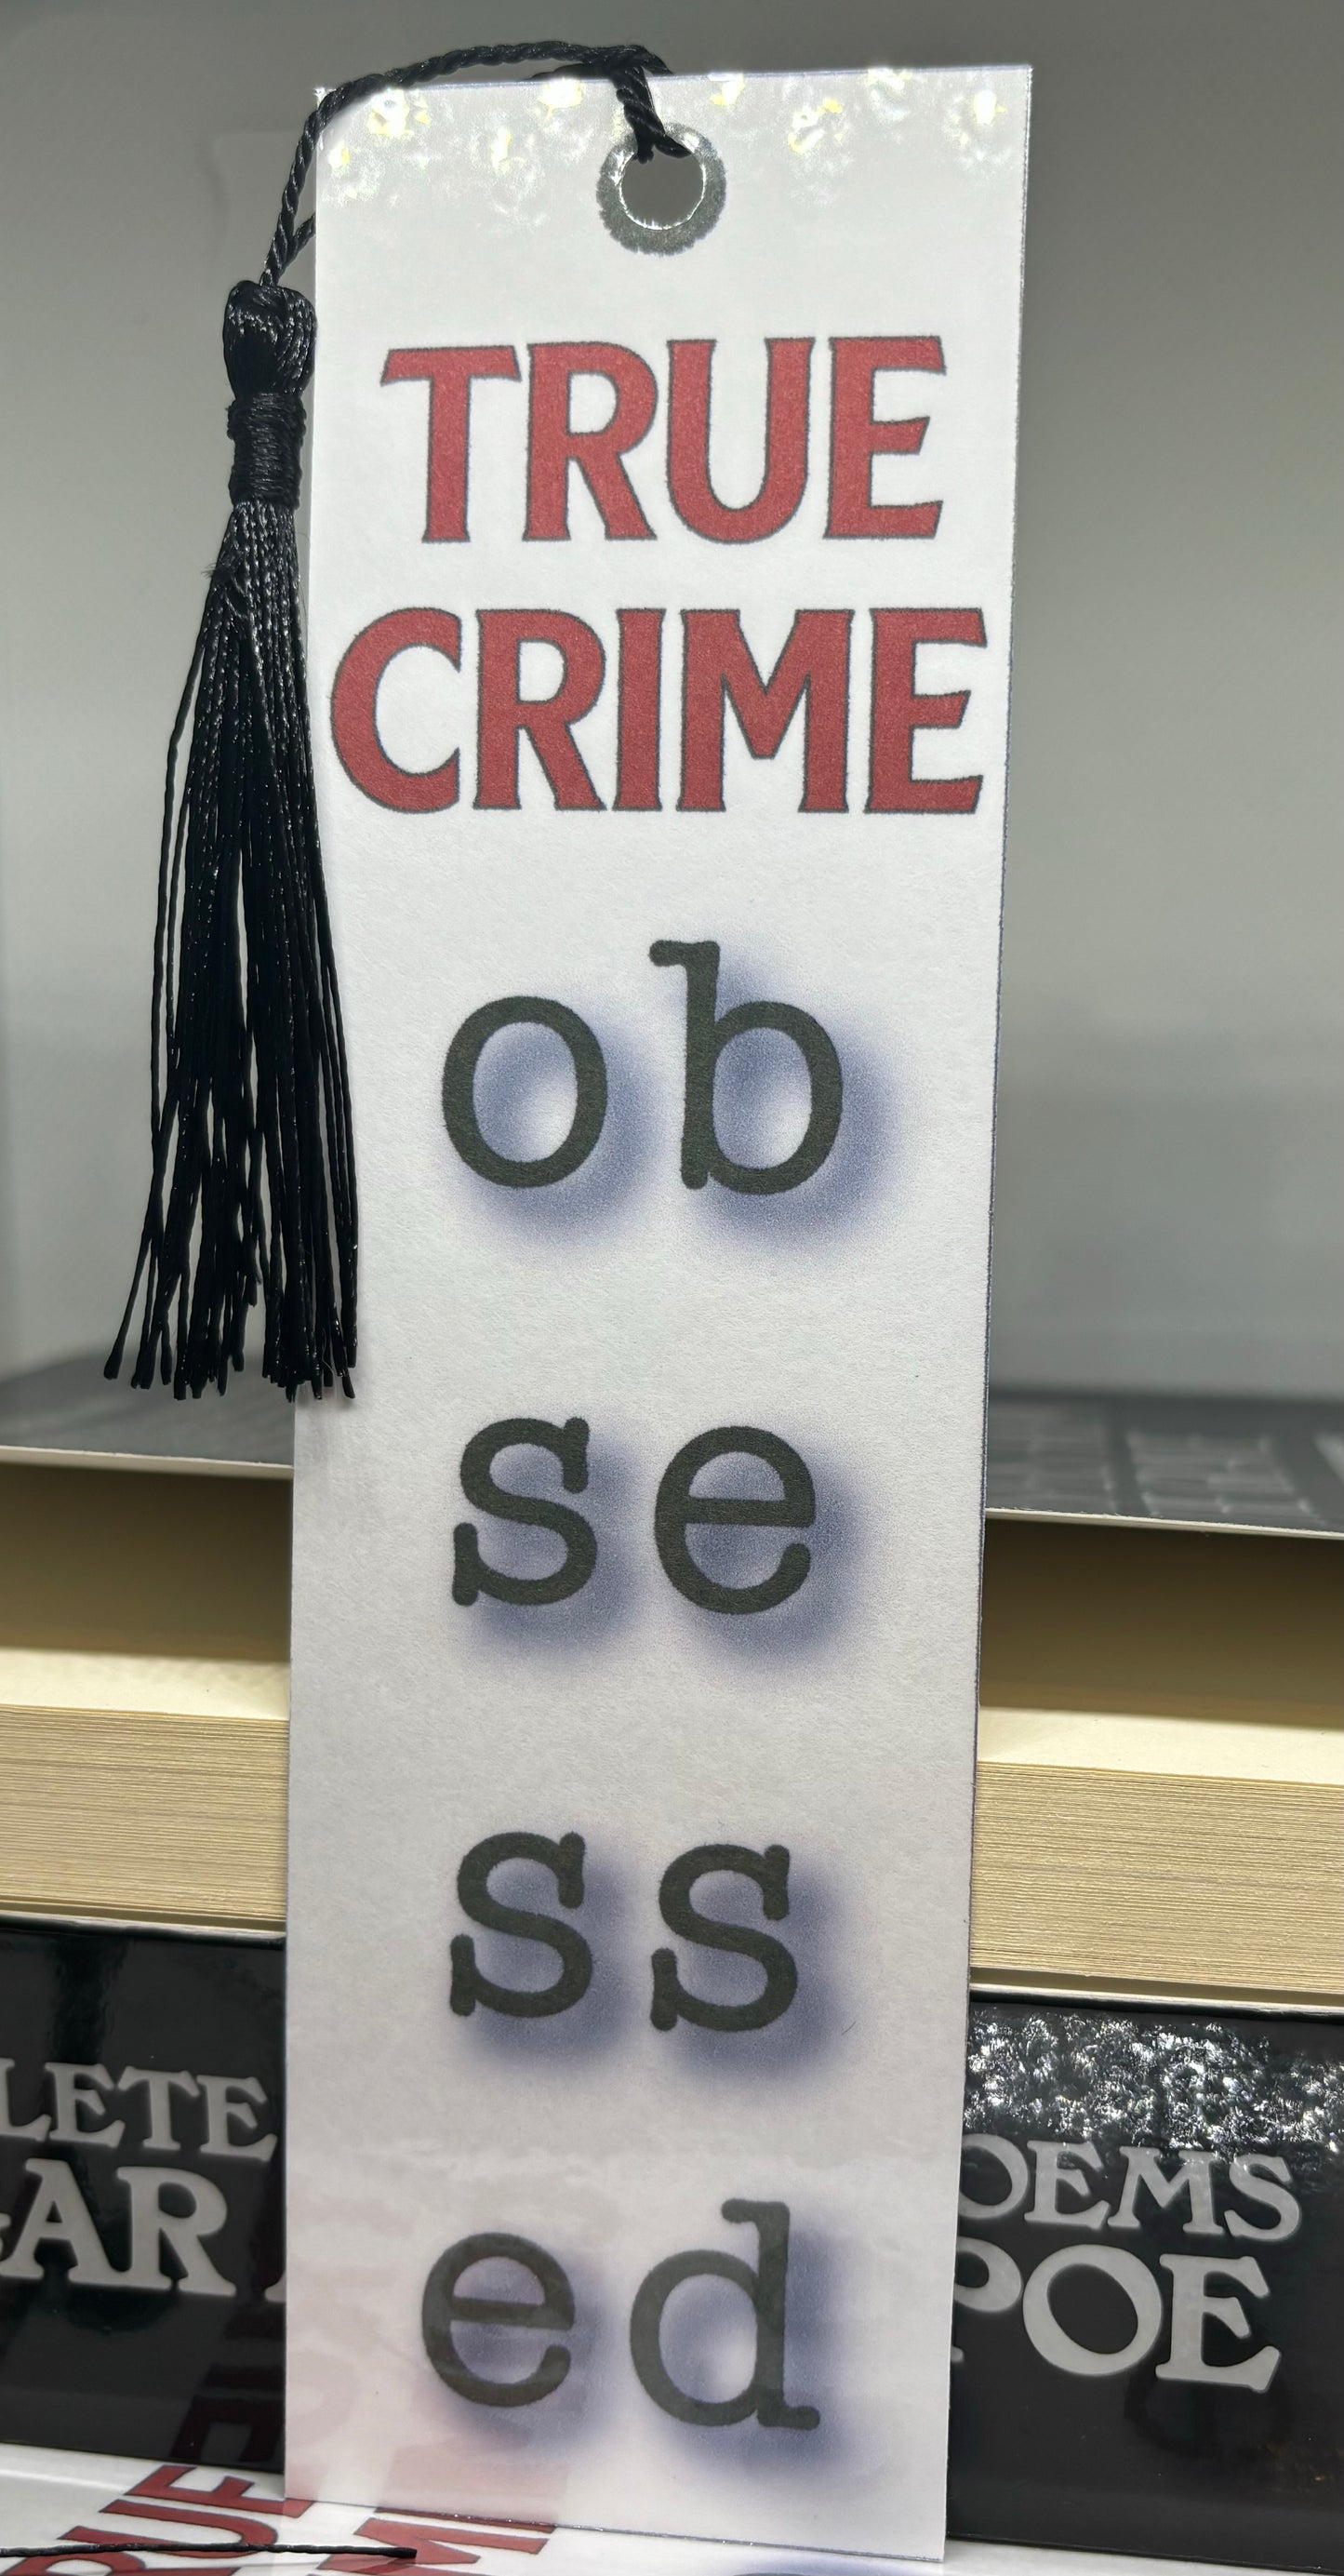 True Crime Obsessed Bookmark